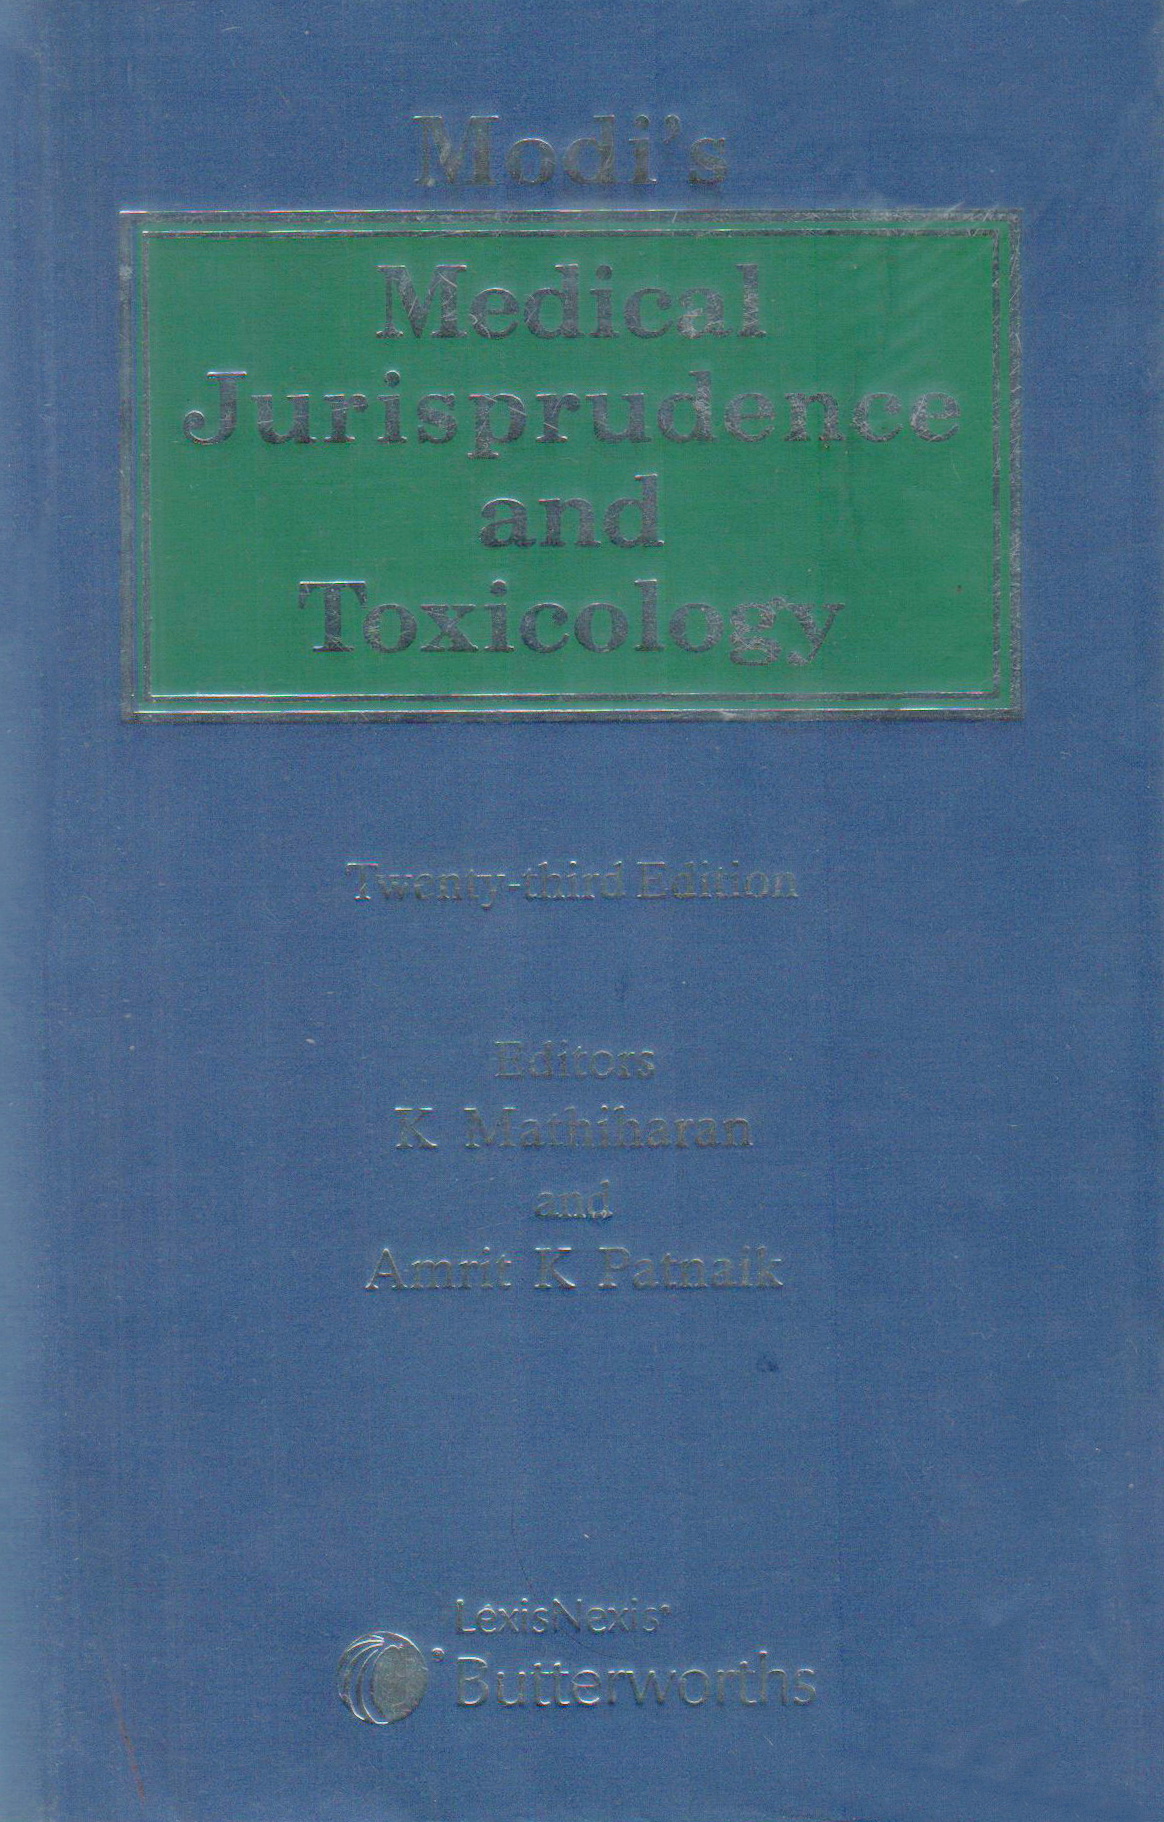 Modi’s Medical Jurisprudence & Toxicology, 23rd Edition, Edited by K. Mathiharan and Amrit K Patnaik